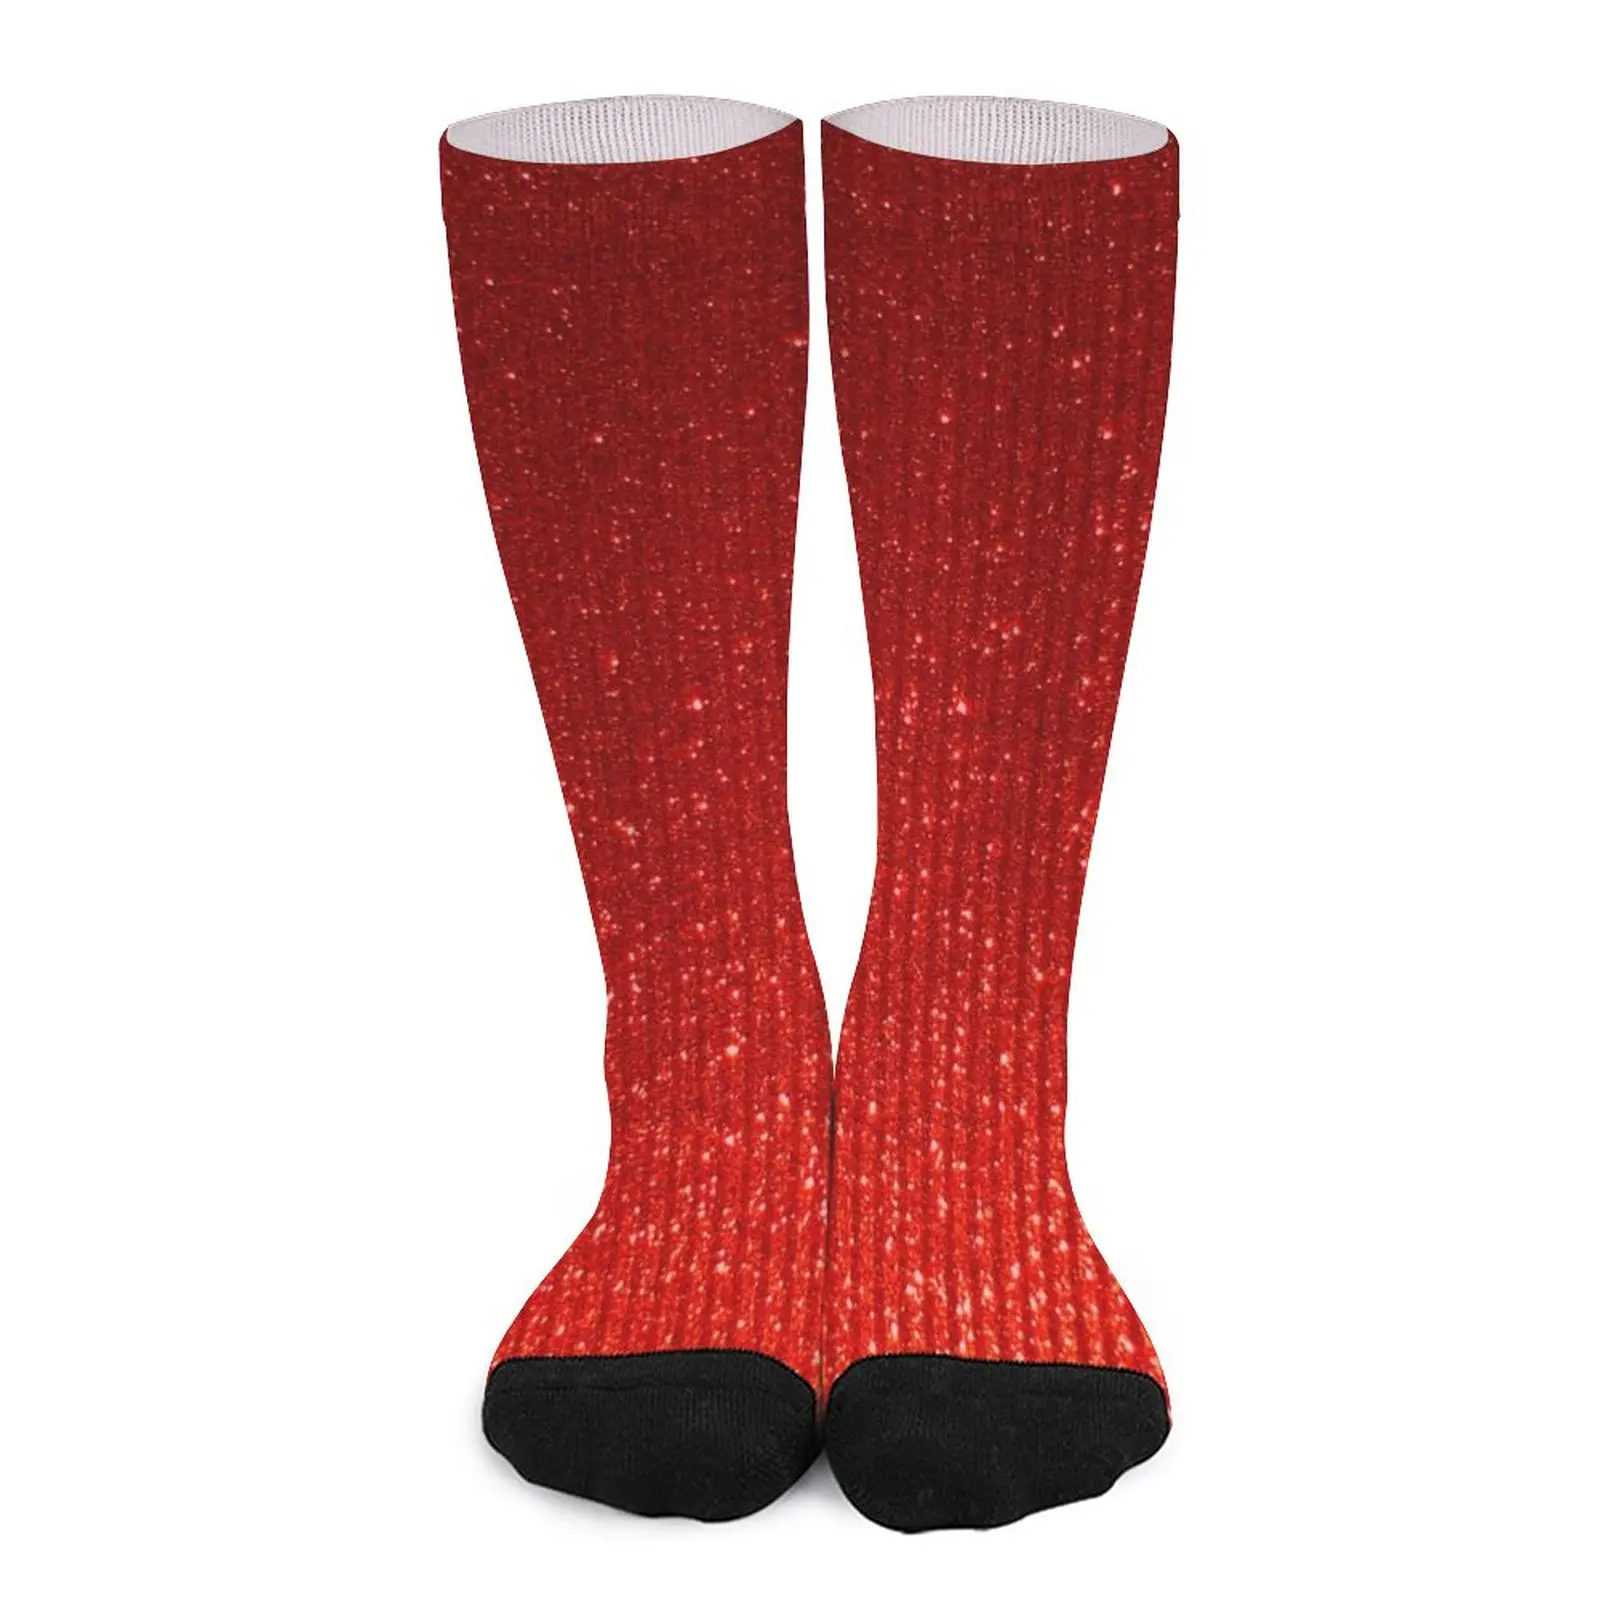 Red Hue Glitter Sparkles Texture Photography Socks retro Christmas